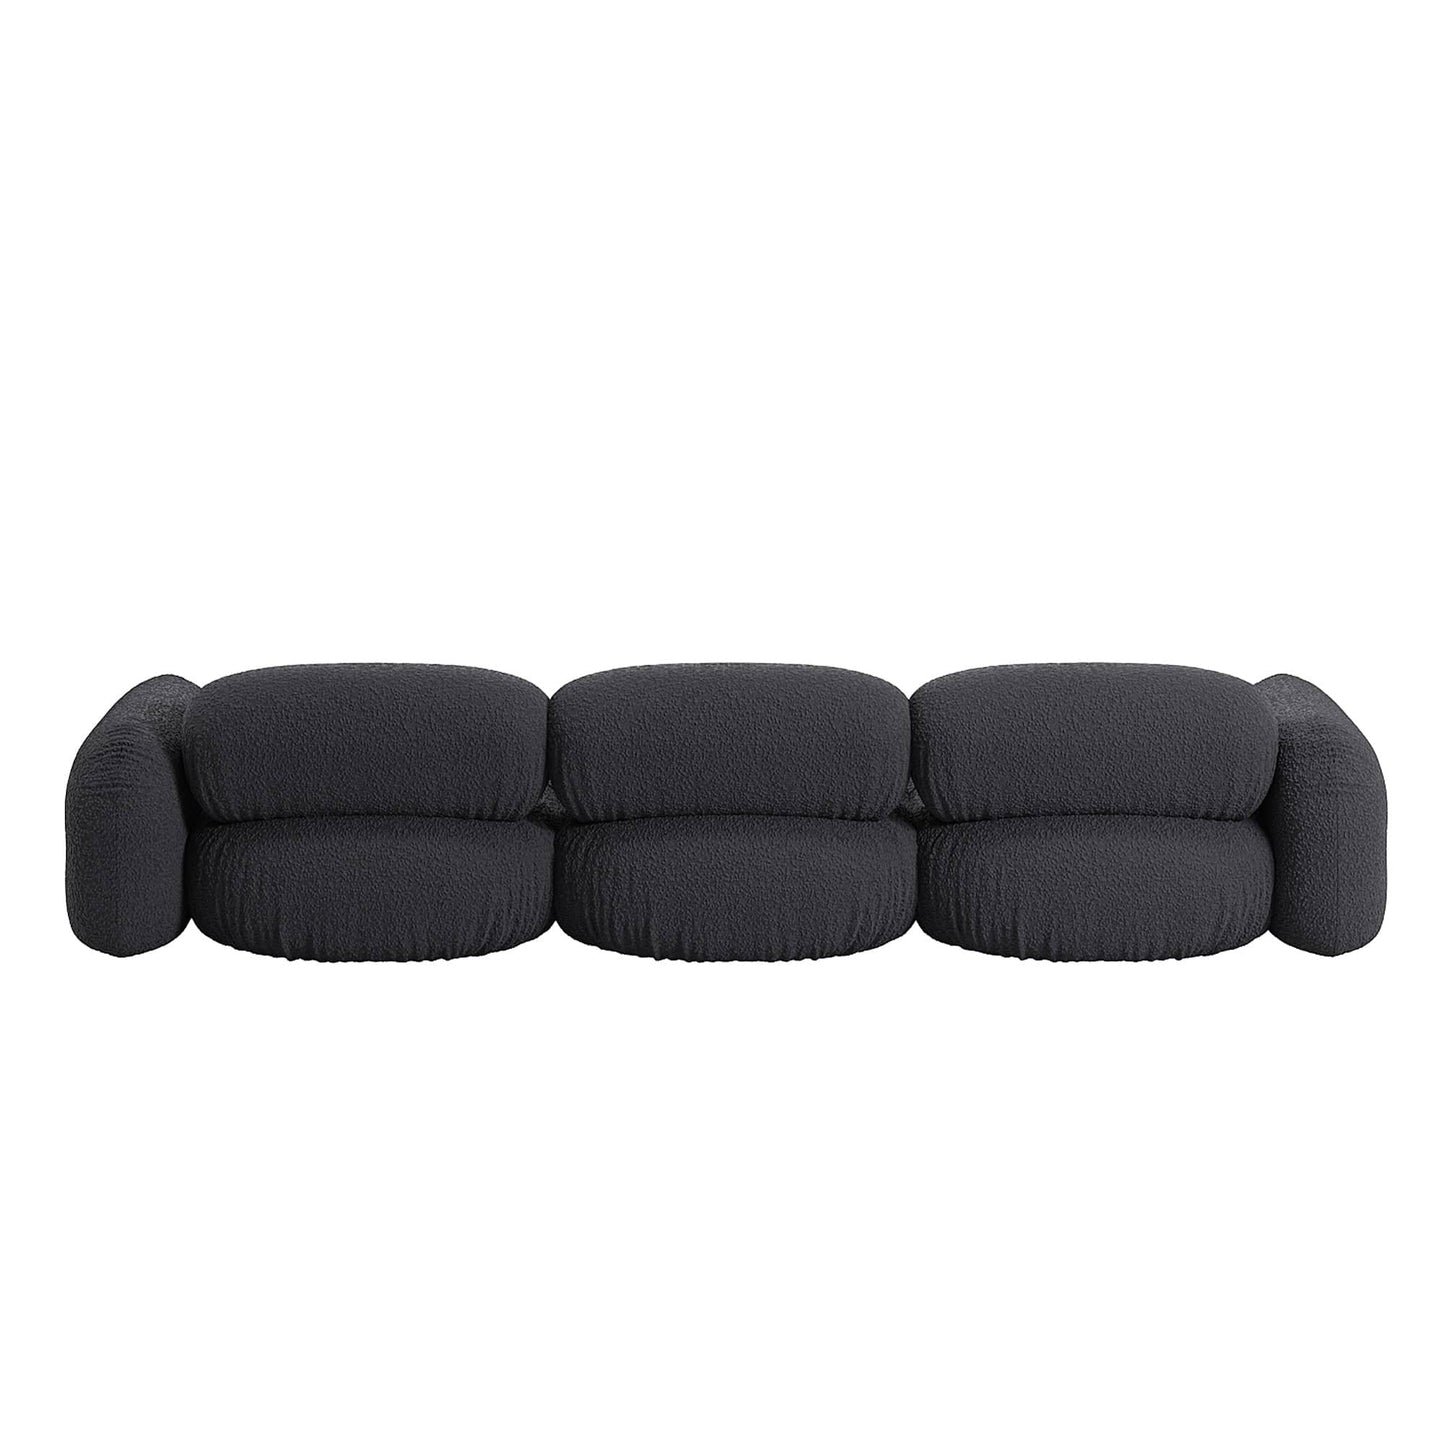 Ondo 4 Seater Sofa - Maya Charcoal Boucle